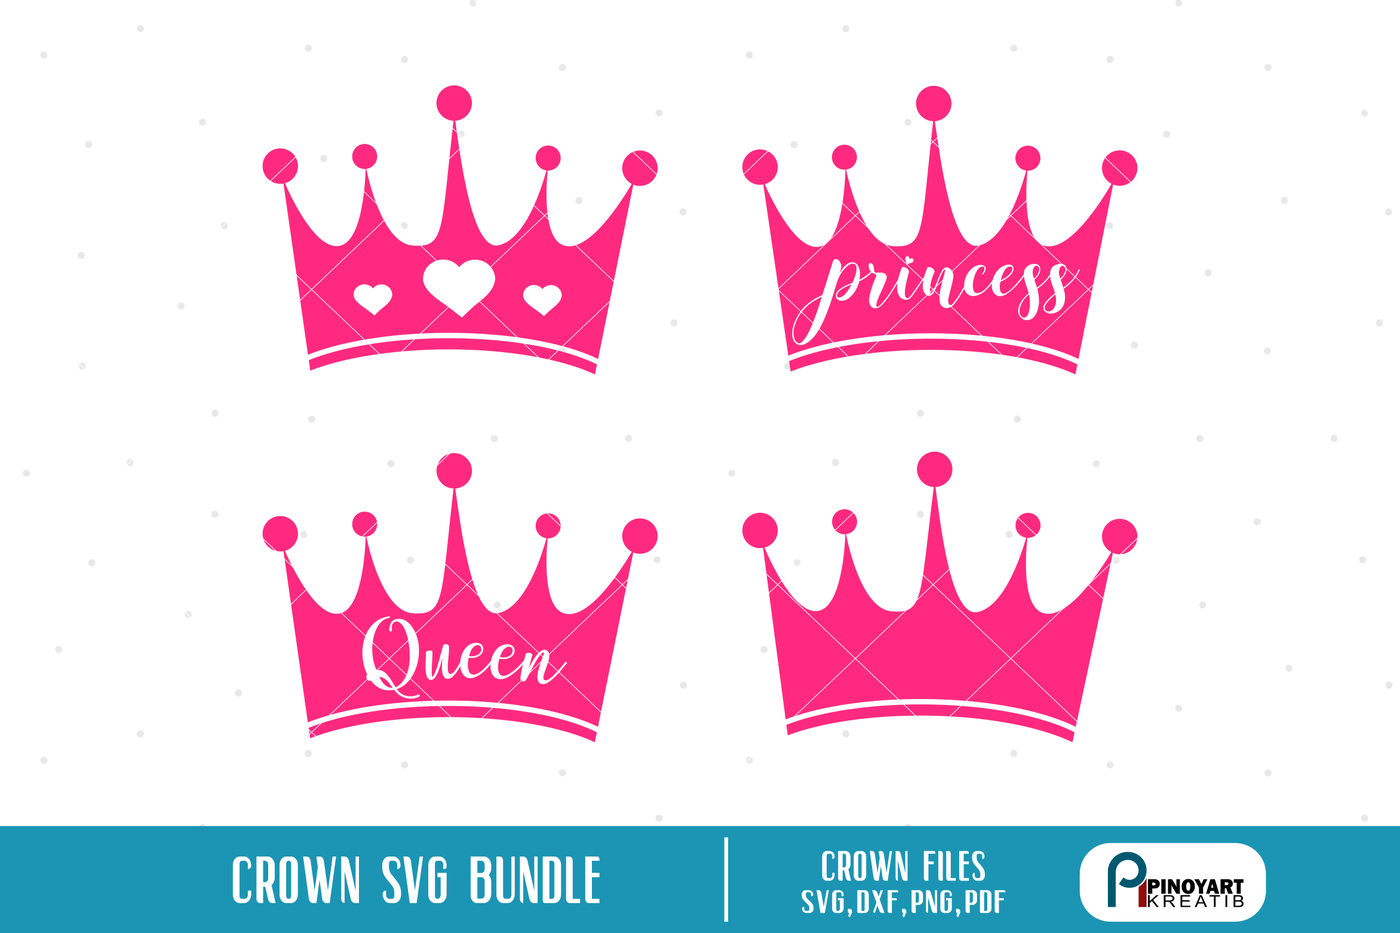 Download Crown Svg Crown Svg File Crown Dxf File Princess Crown Svg Queen Svg By Pinoyart Thehungryjpeg Com